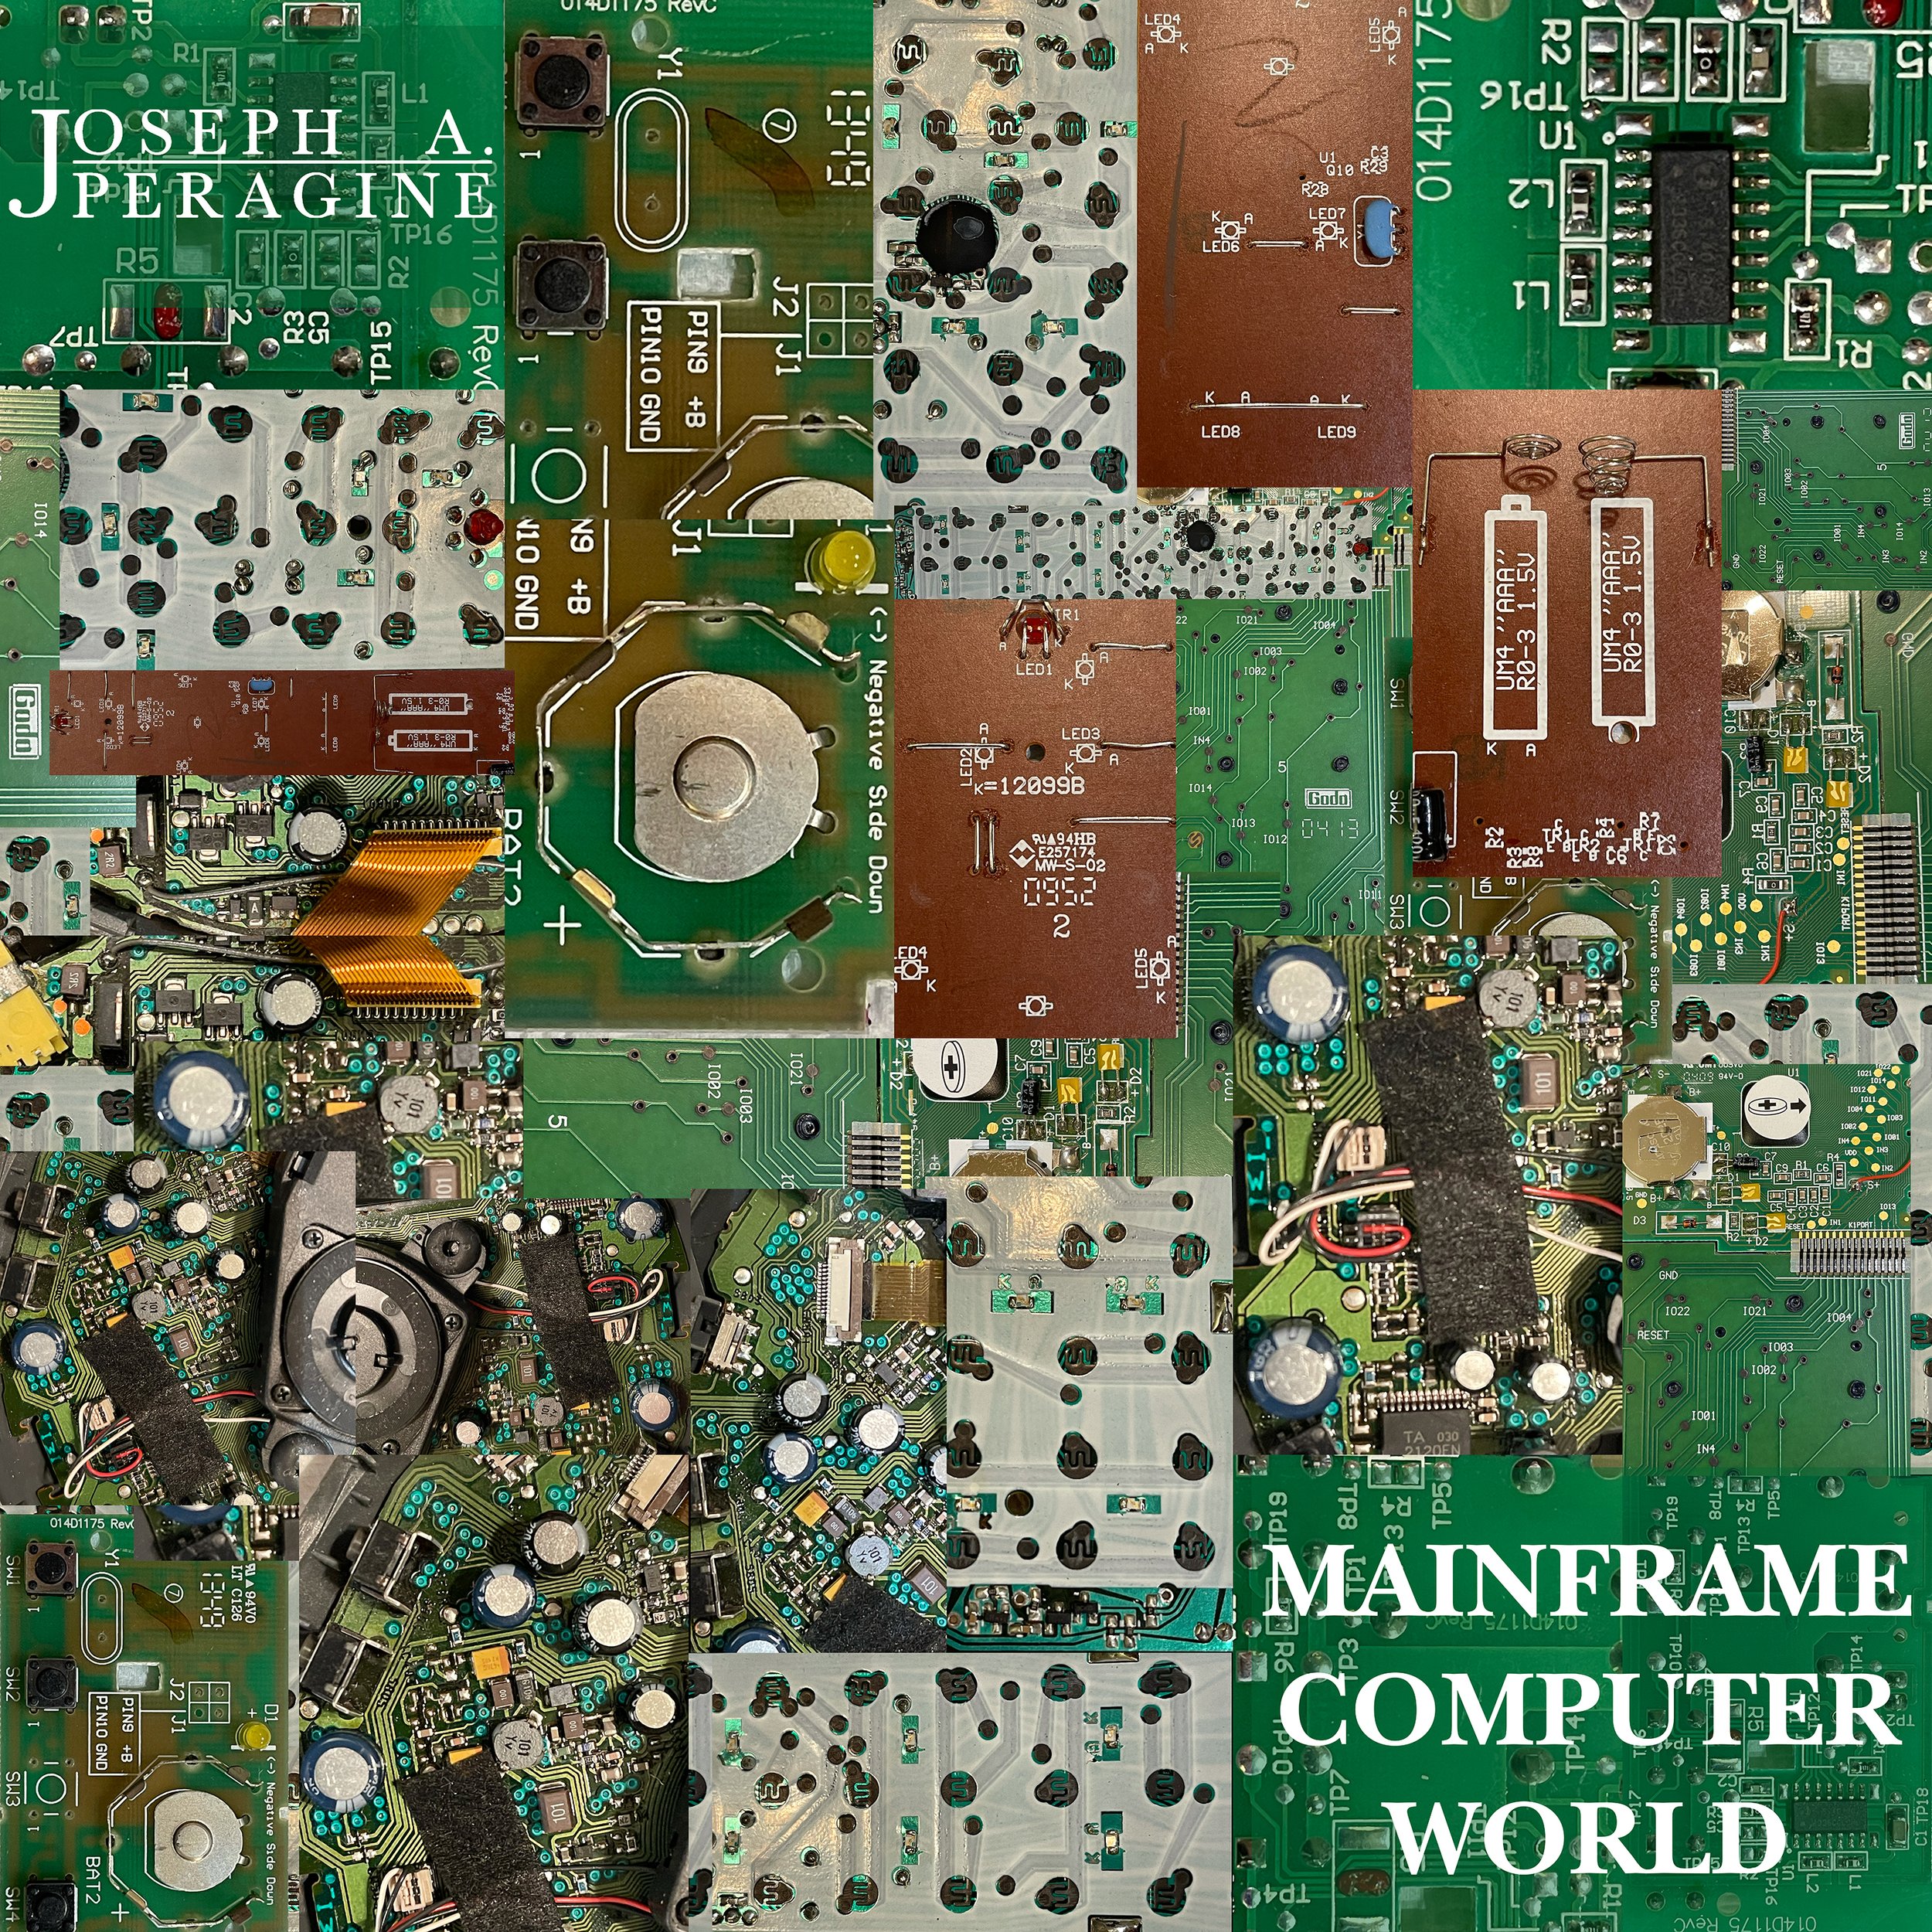 Mainframe Computer World Album Cover 10x10.jpg